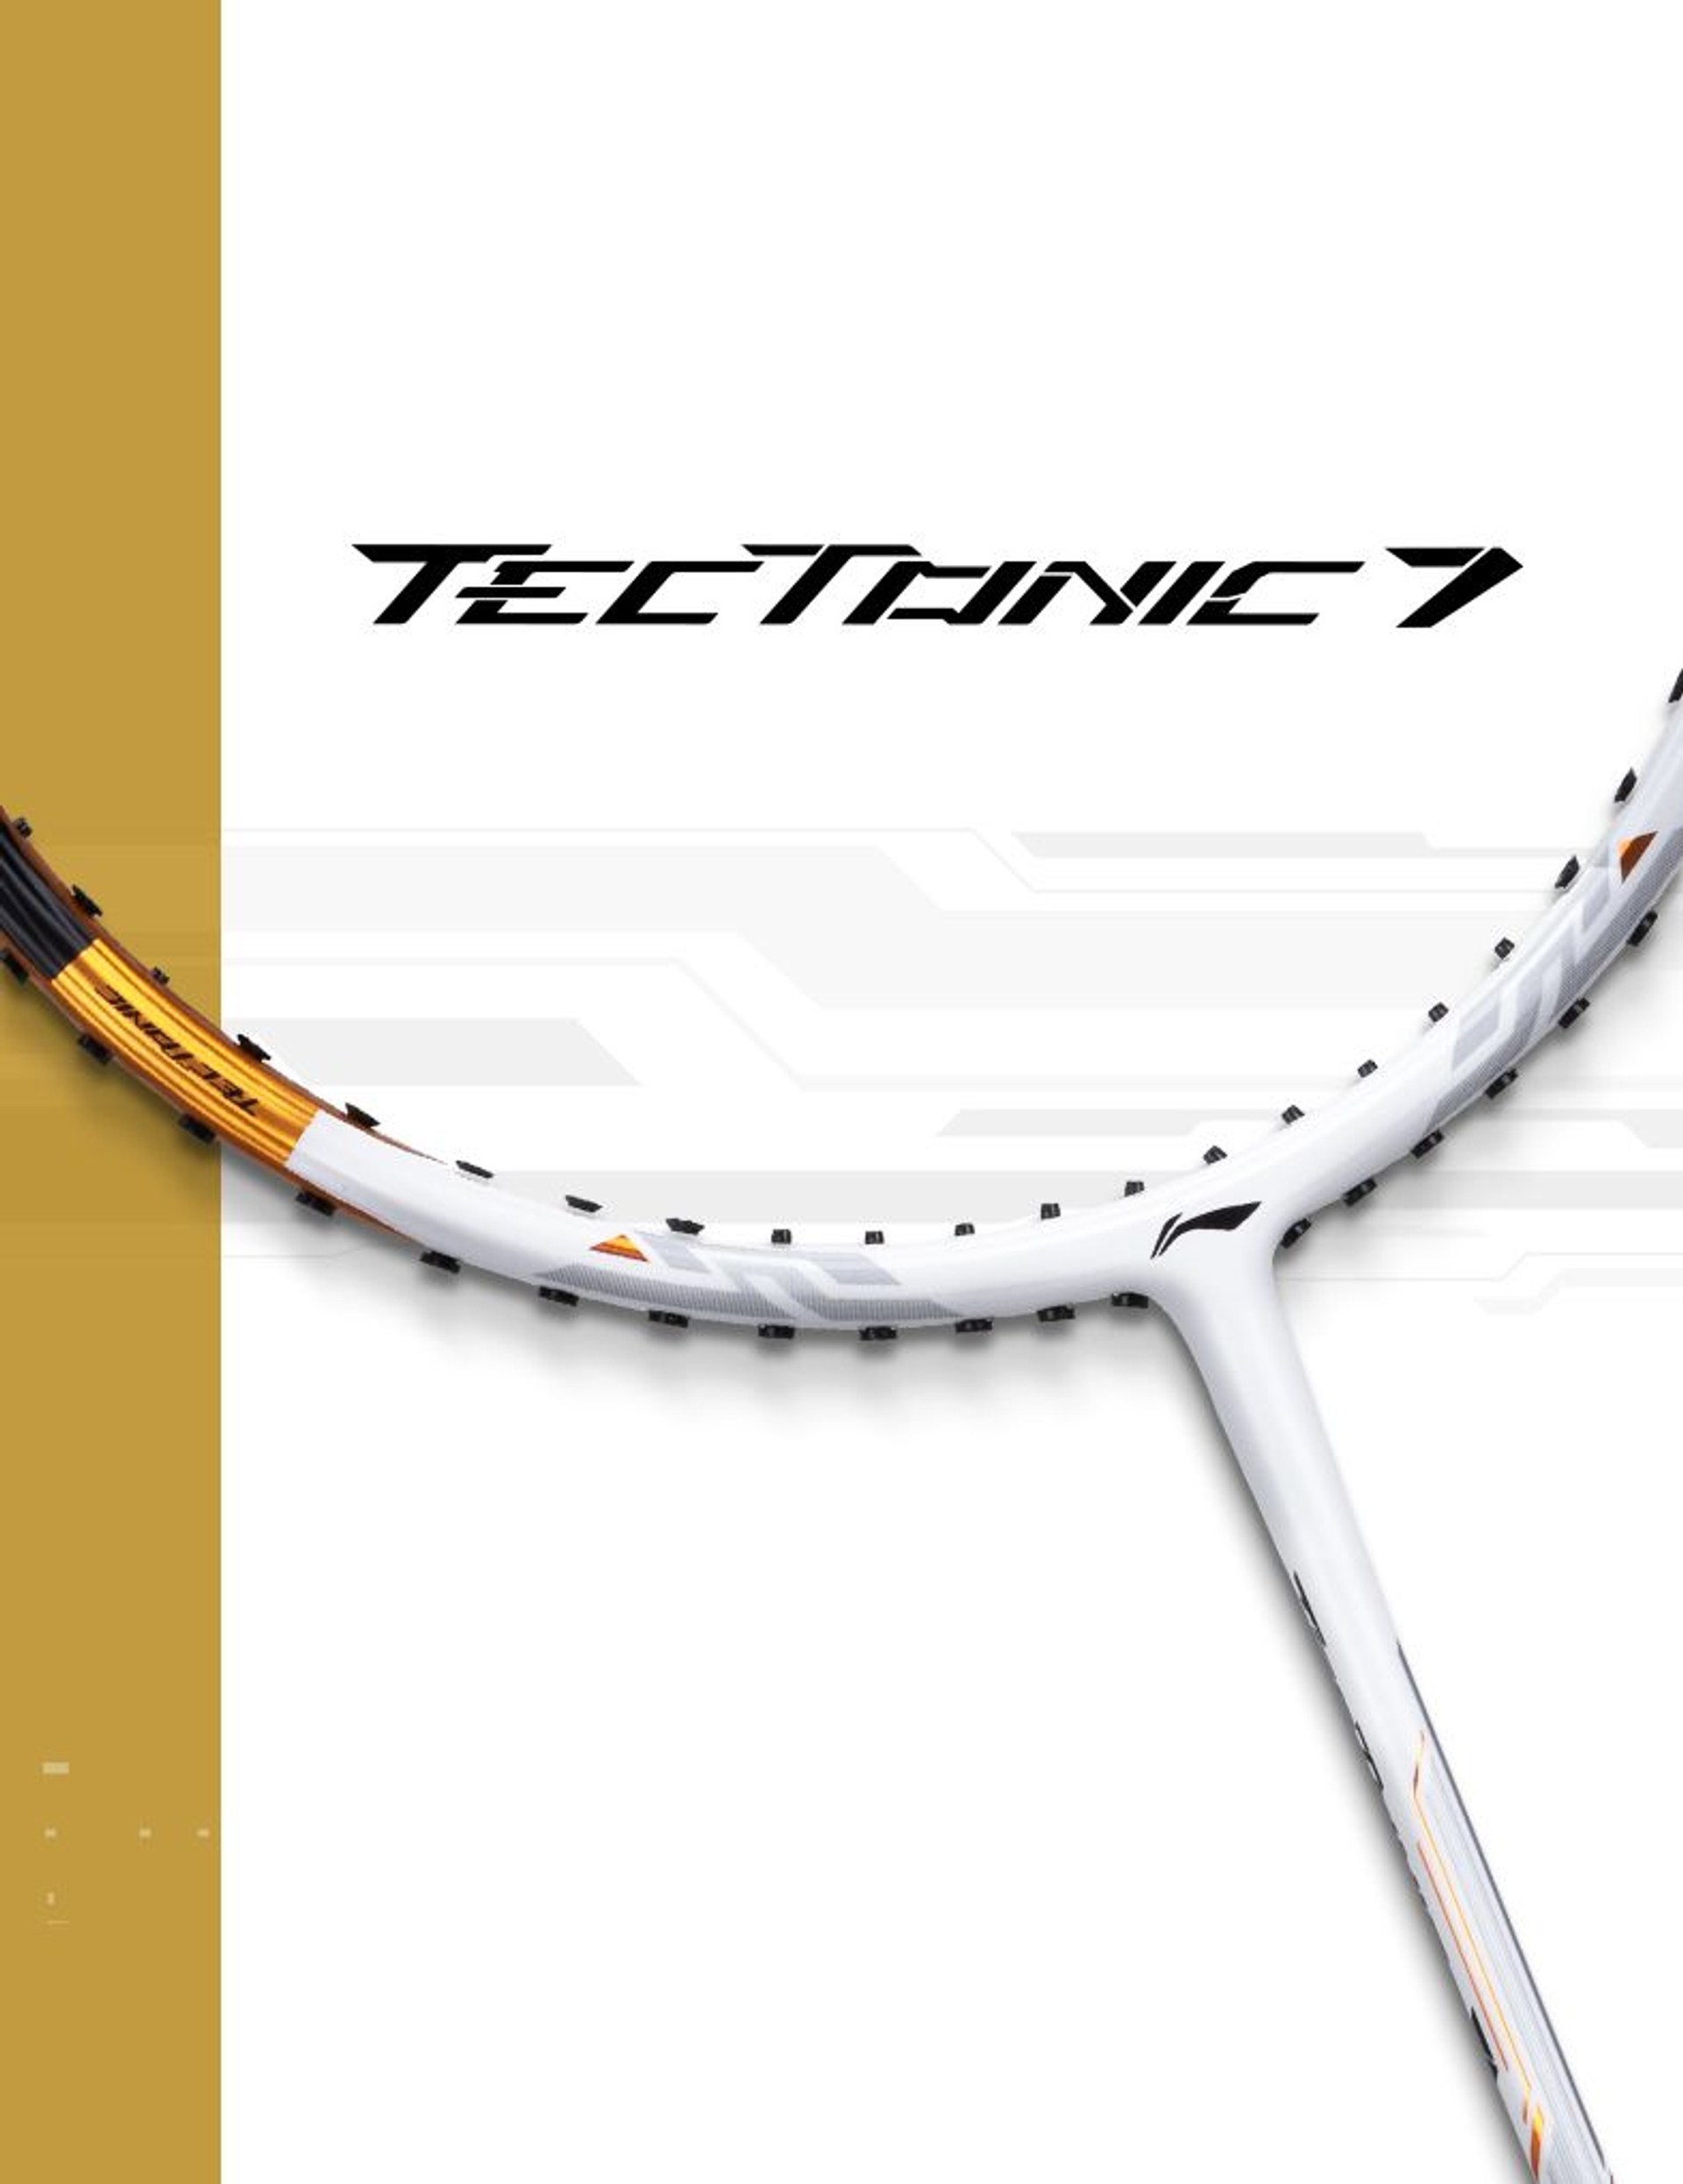 Close up of Tectonic 7 Badminton racket by Li-Ning Studio